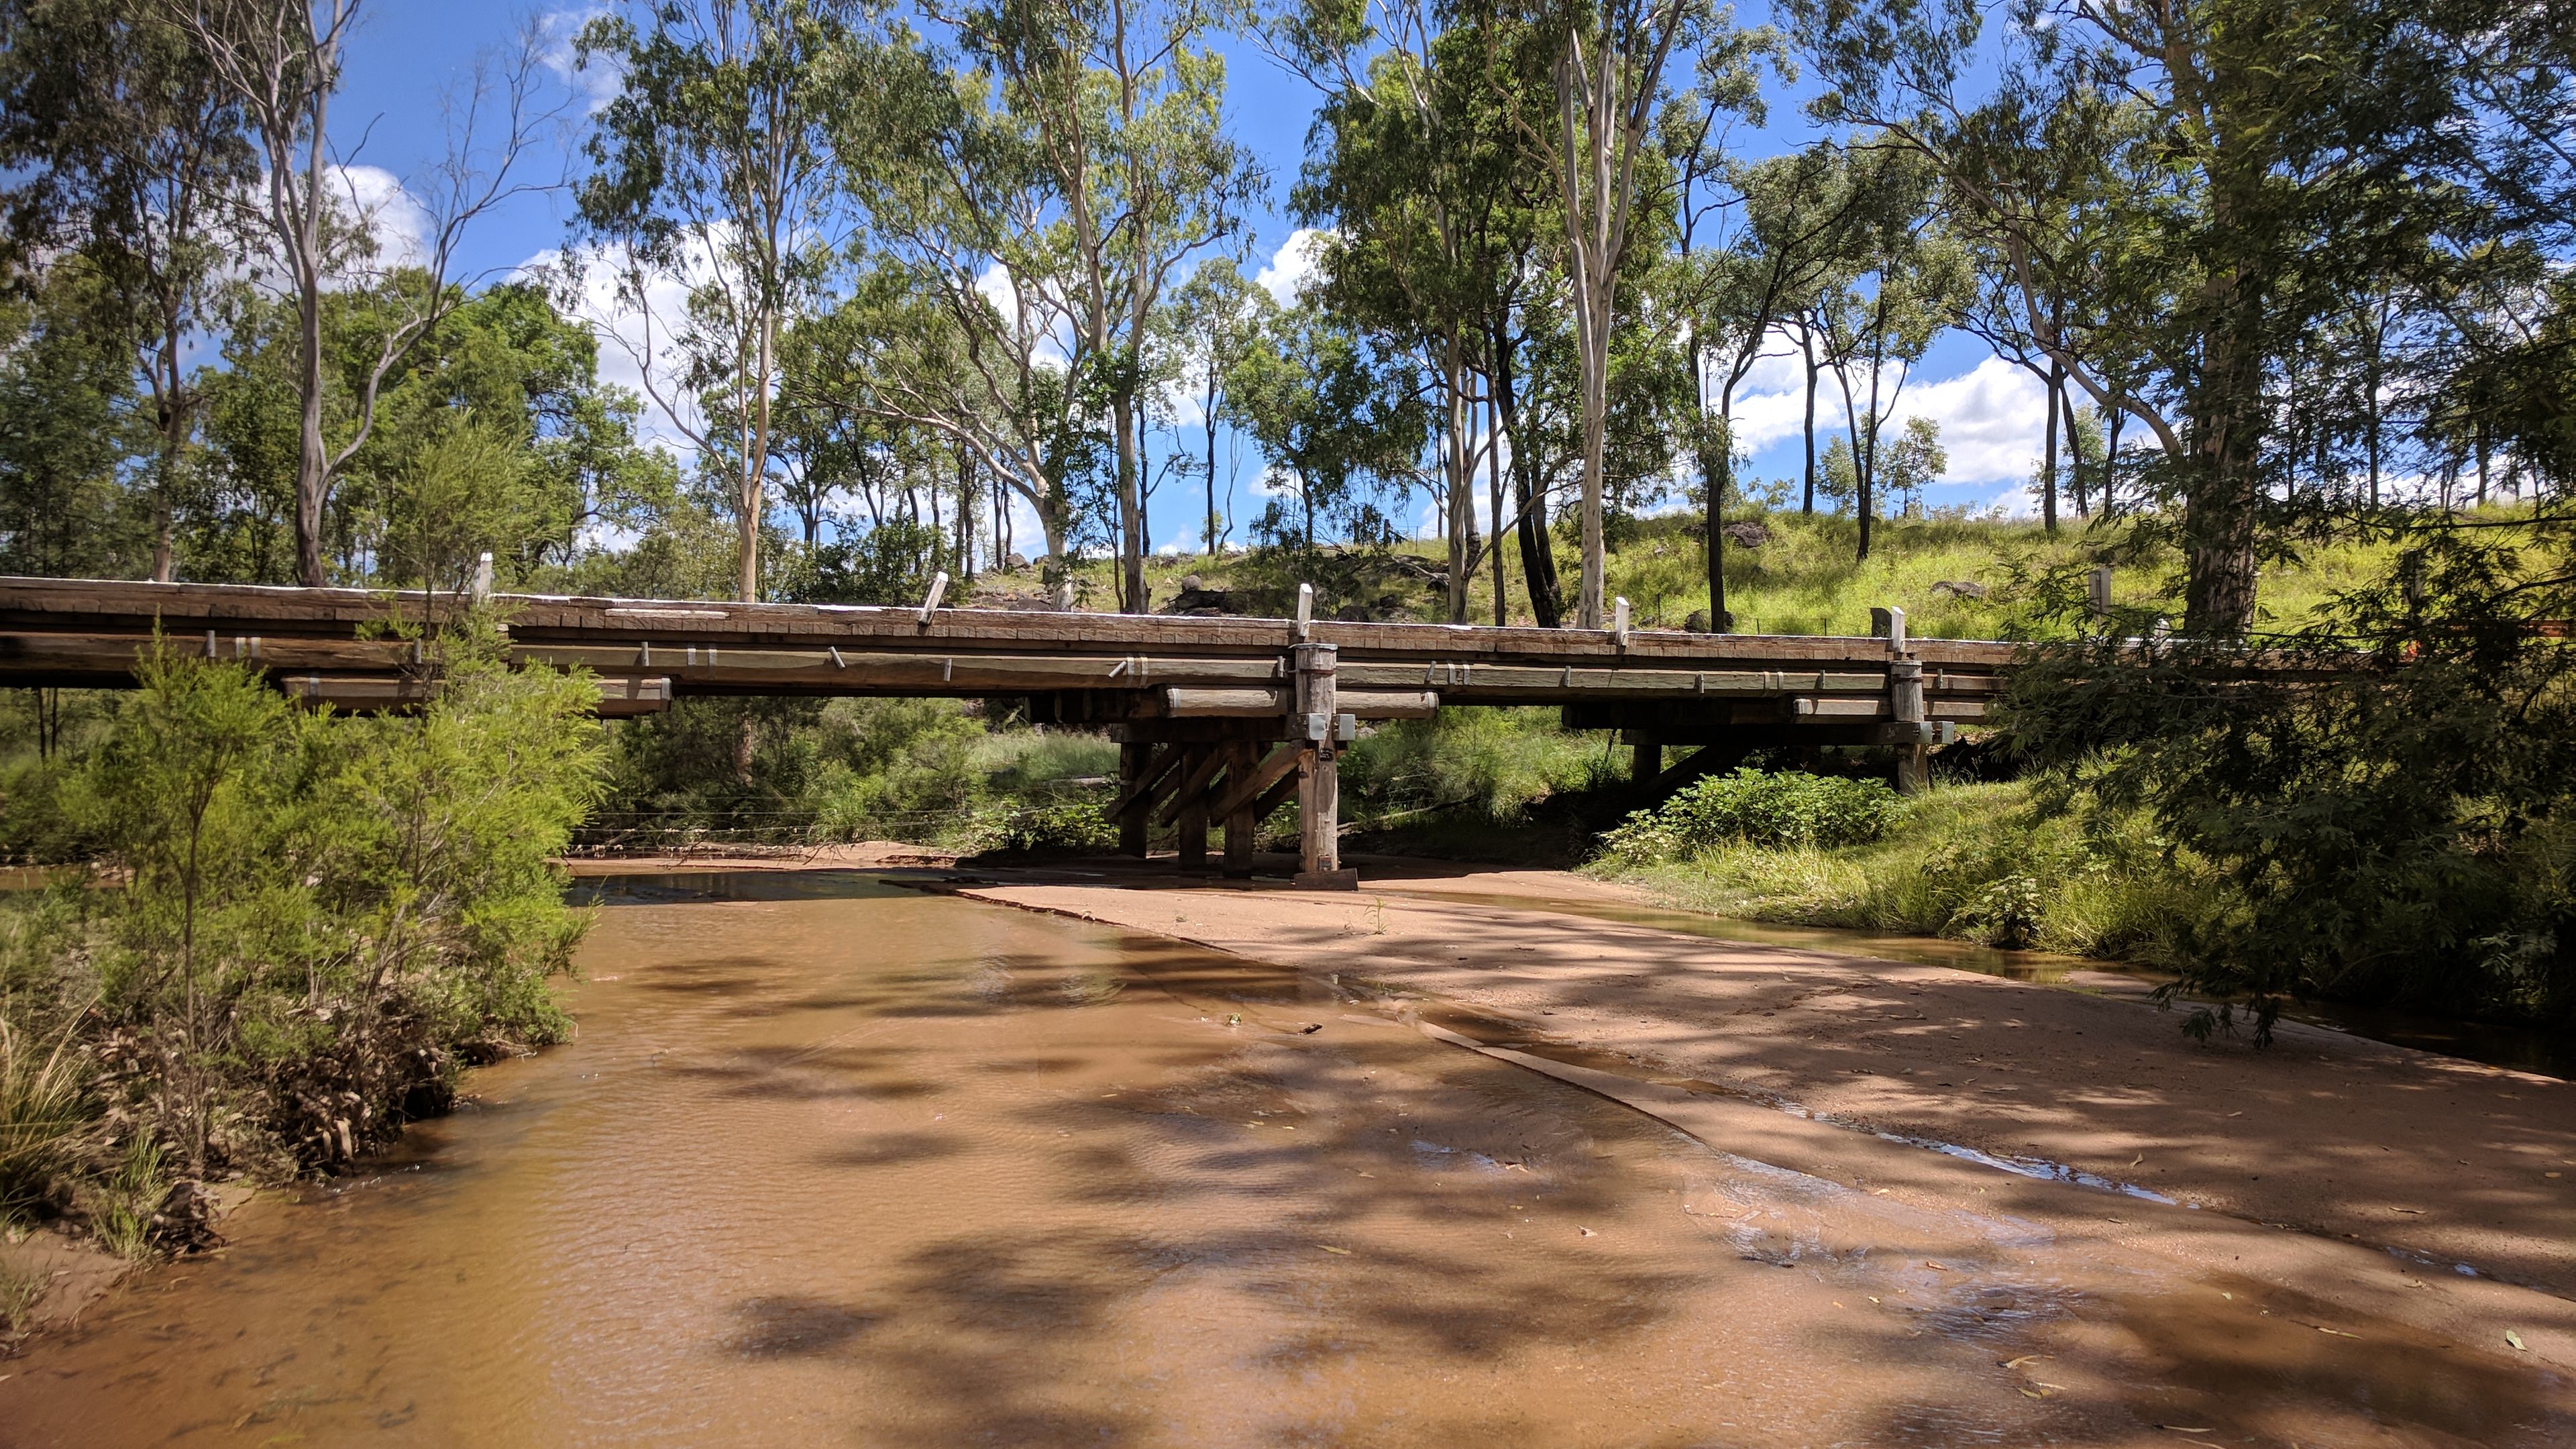 Old Wooden Bridge, Australia (OC) - Imgur